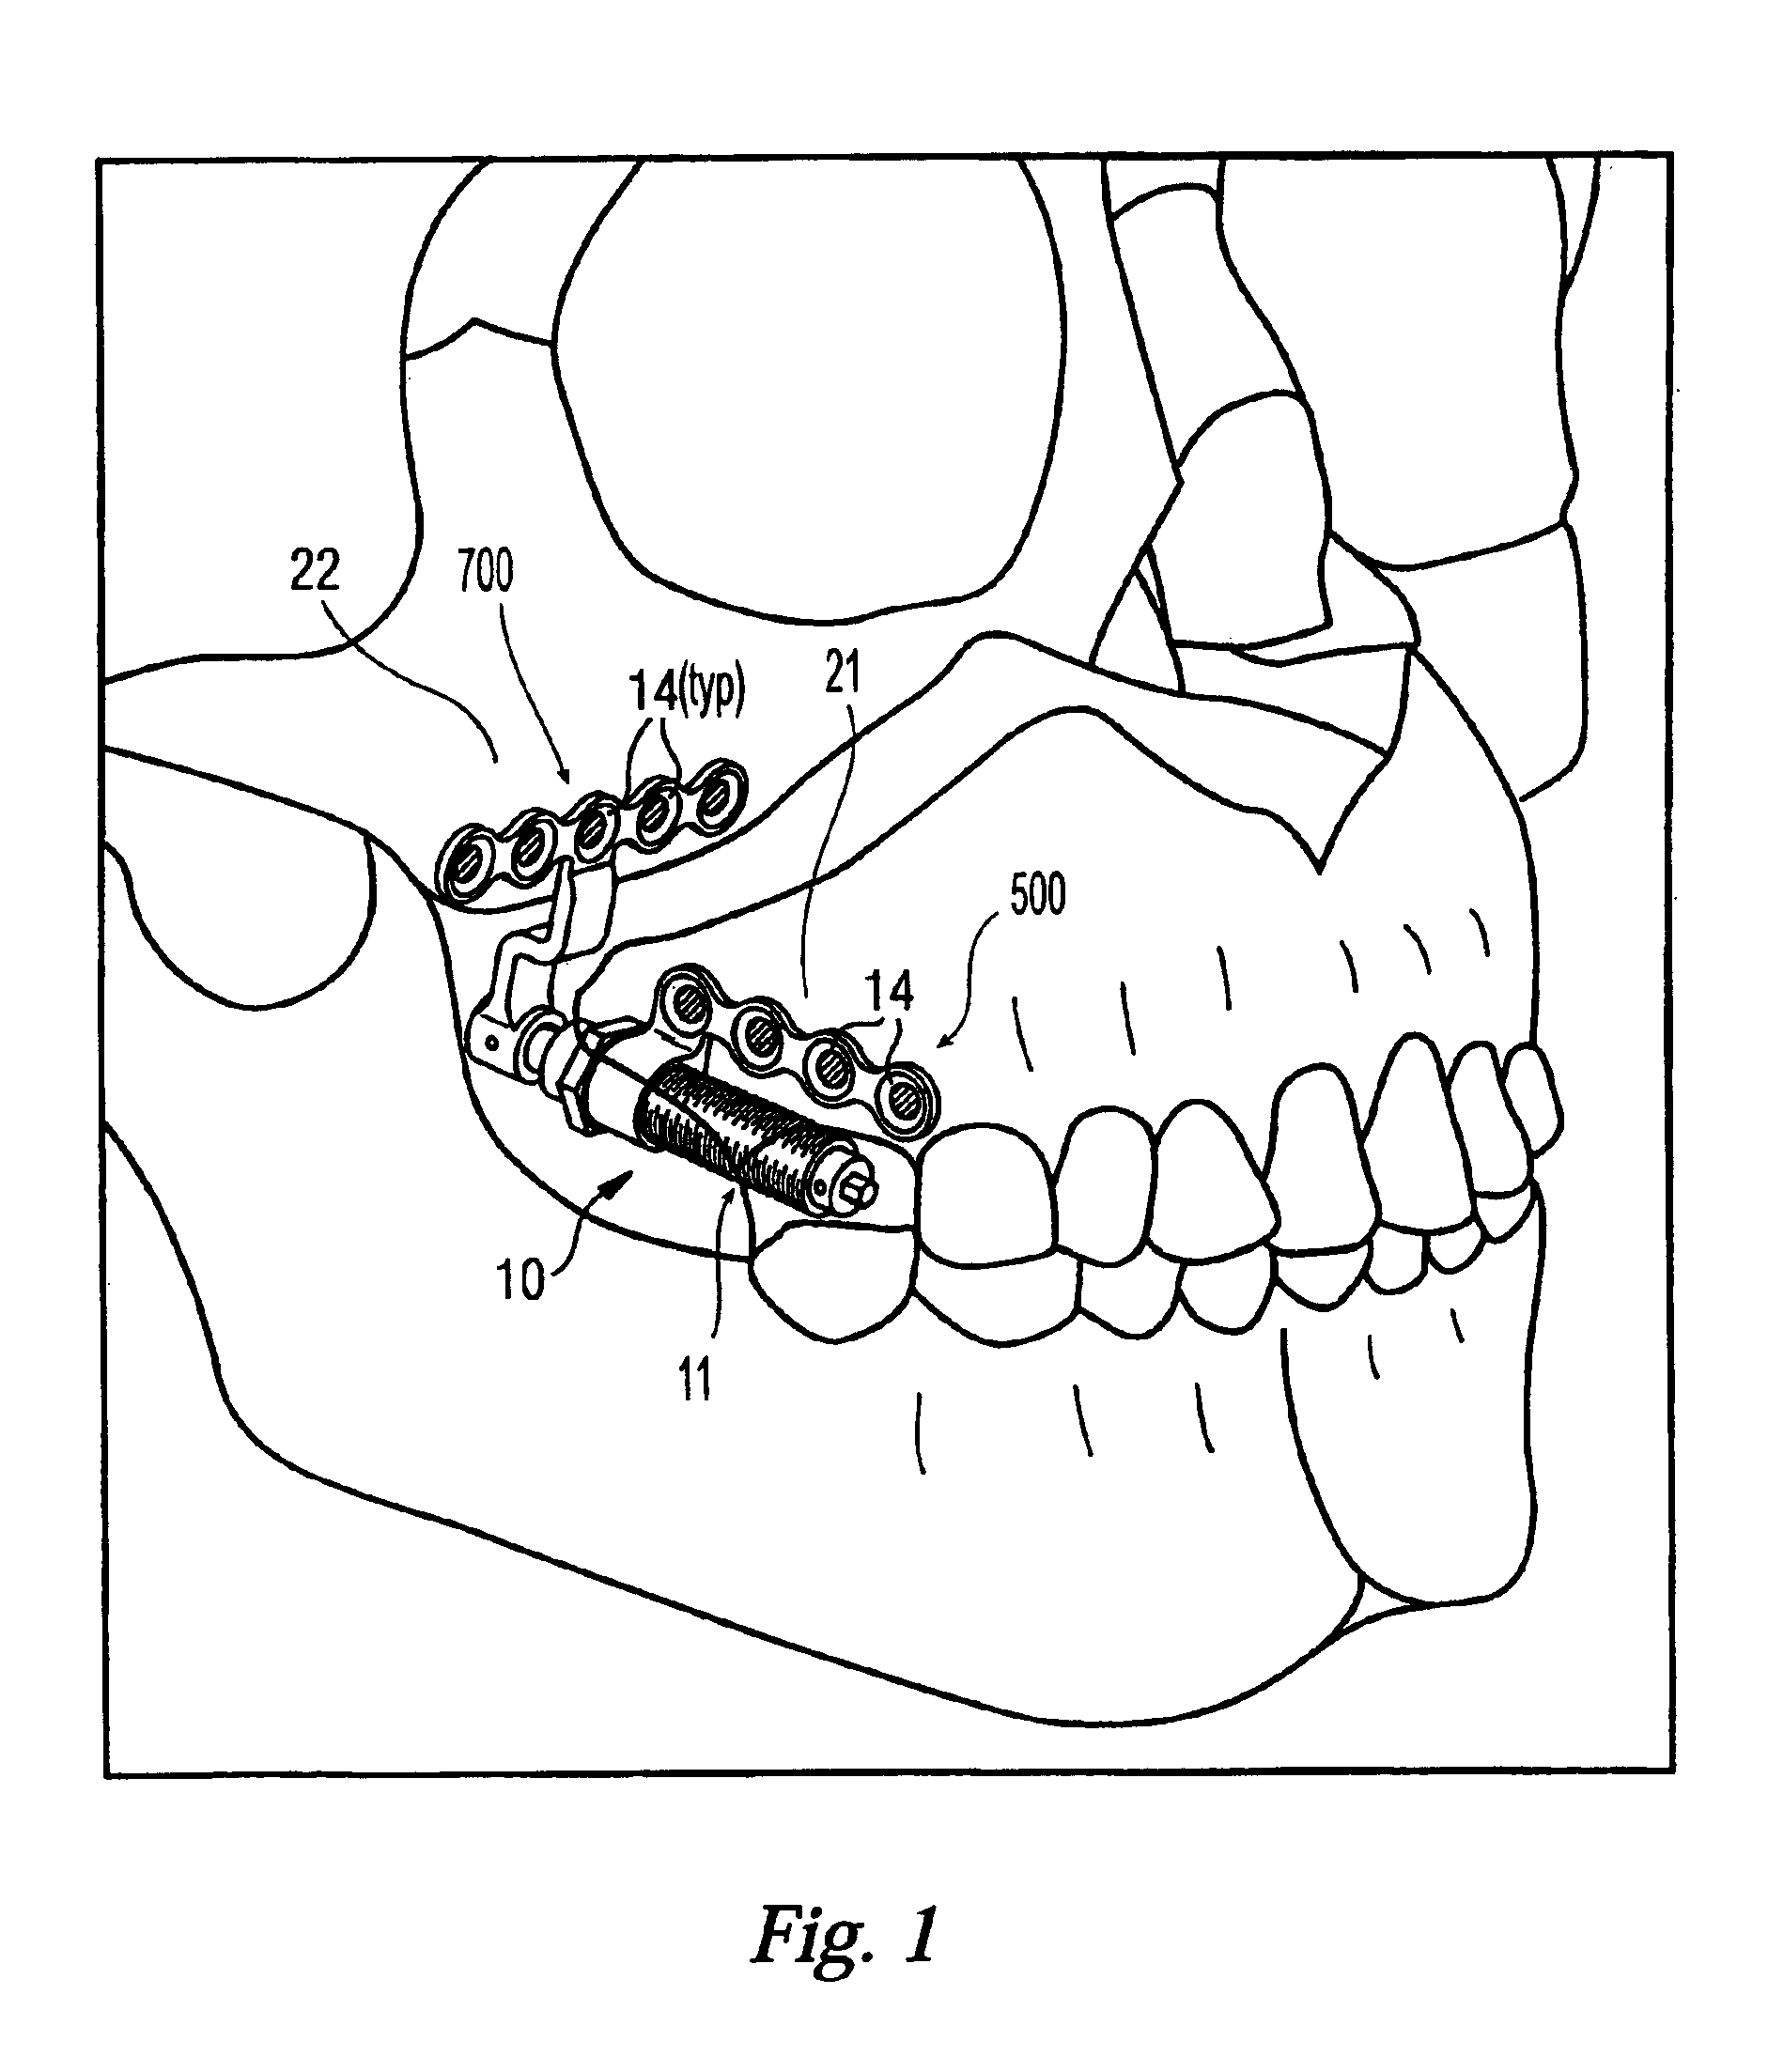 Compact maxillary distractor